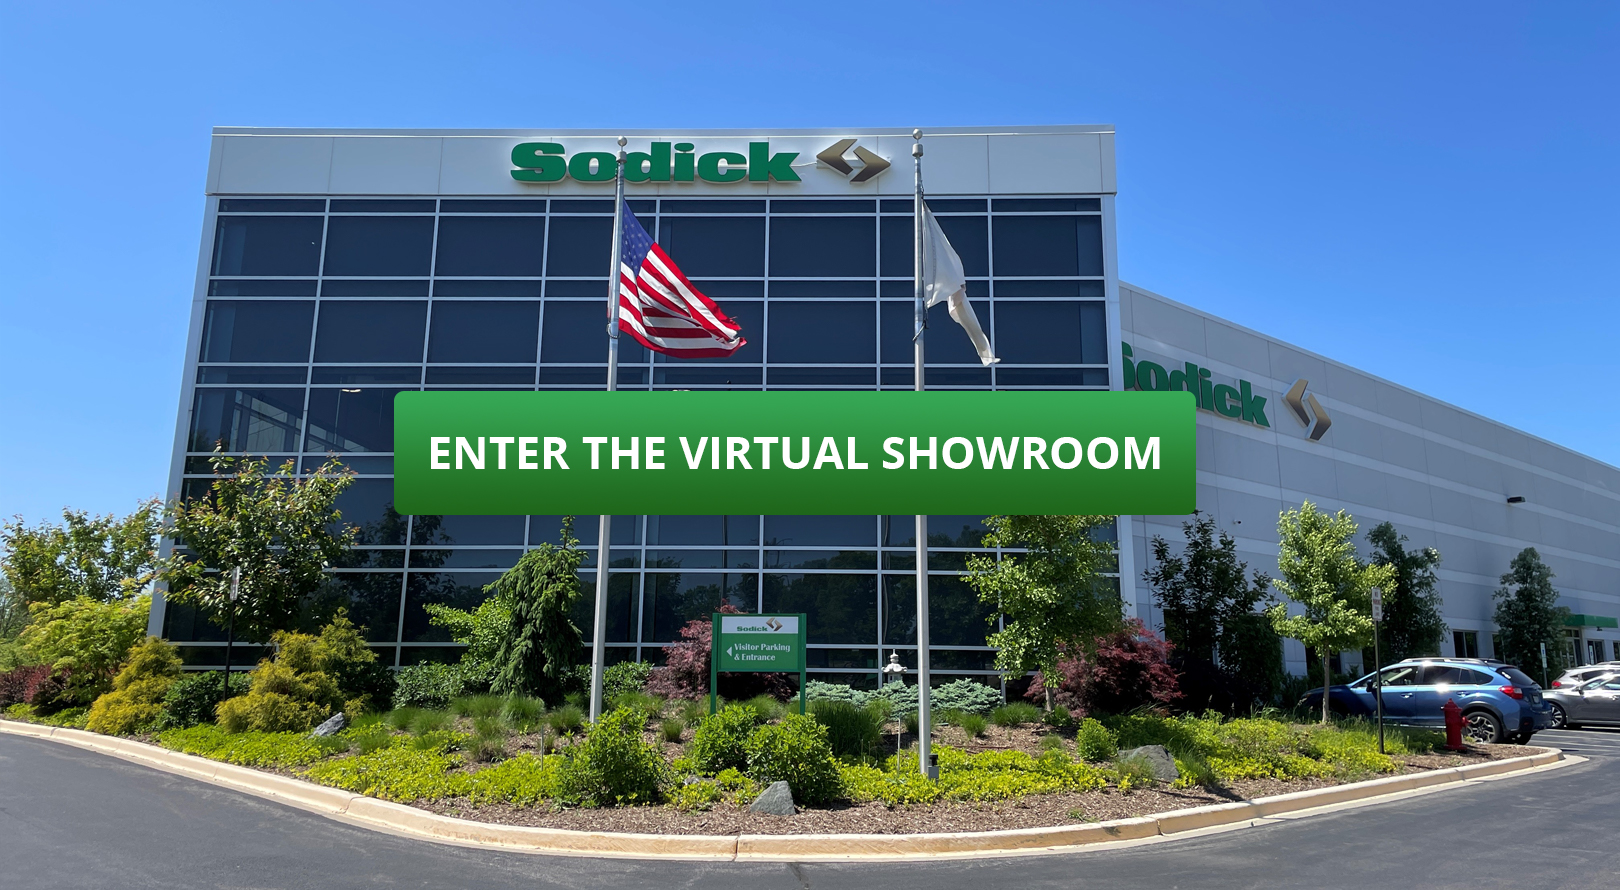 Sodick Virtual Showroom